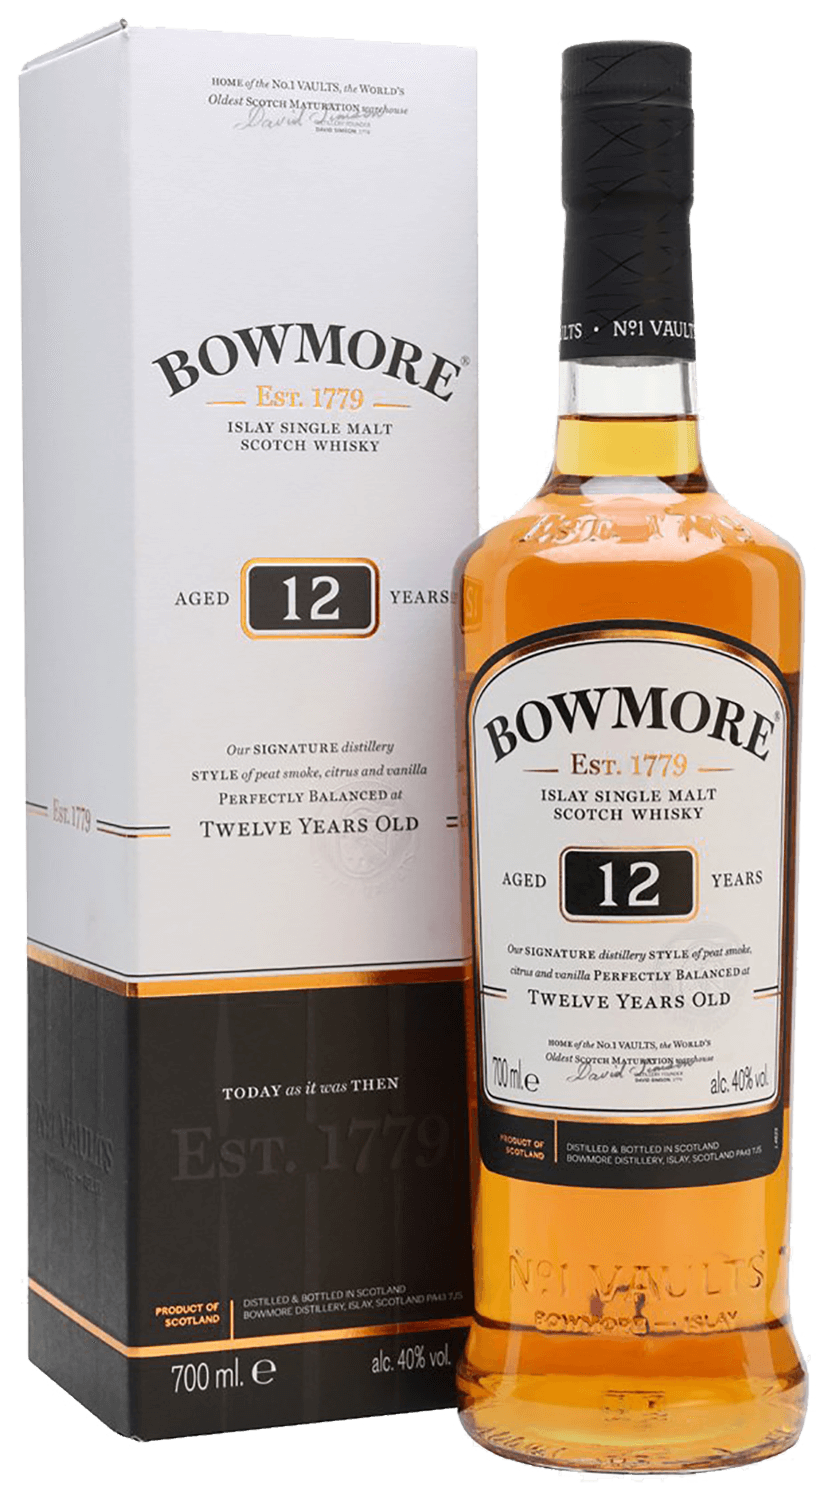 Bowmore Islay Single Malt Scotch Whisky 12 y.o. (gift box) bunnahabhain stiuireadair islay single malt scotch whisky gift box